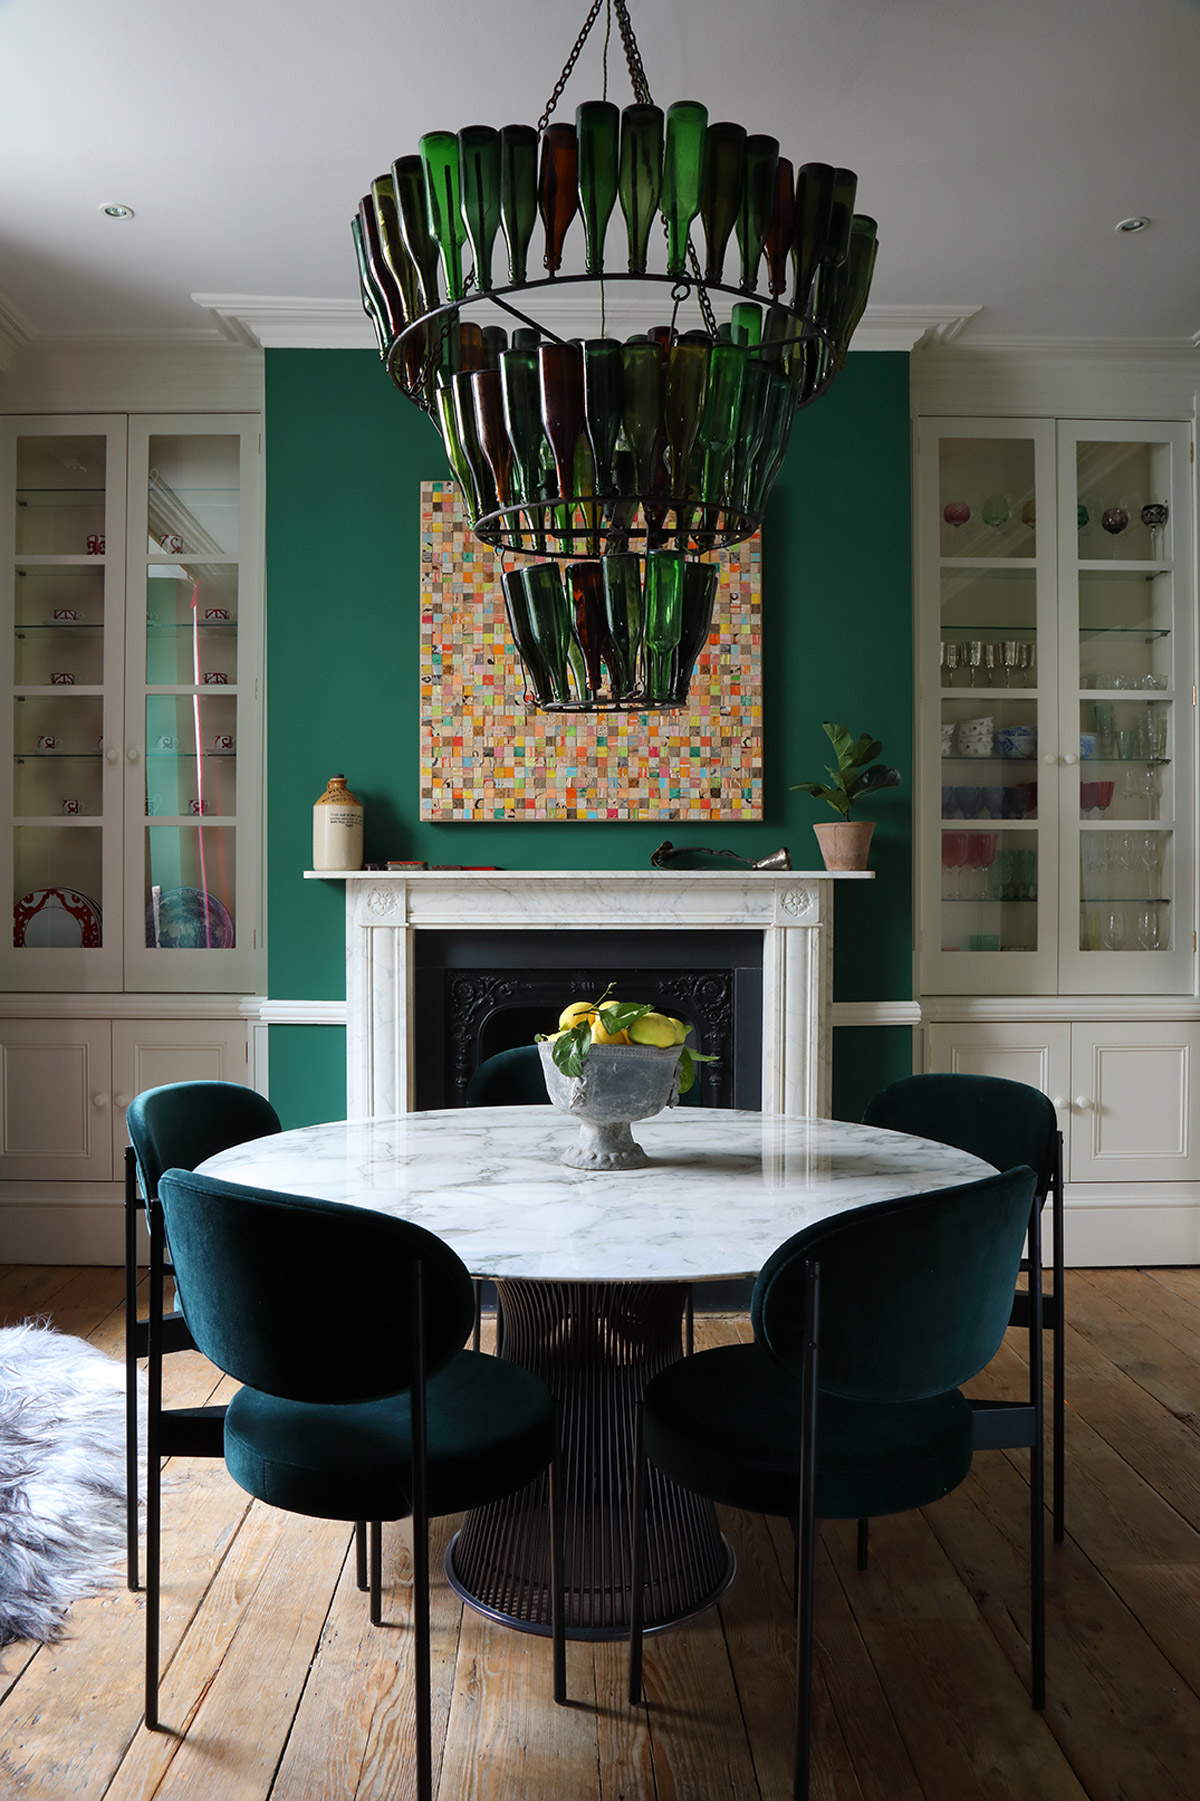 Interior designer, Ana Engelhorn project image of dining room interior with fireplace